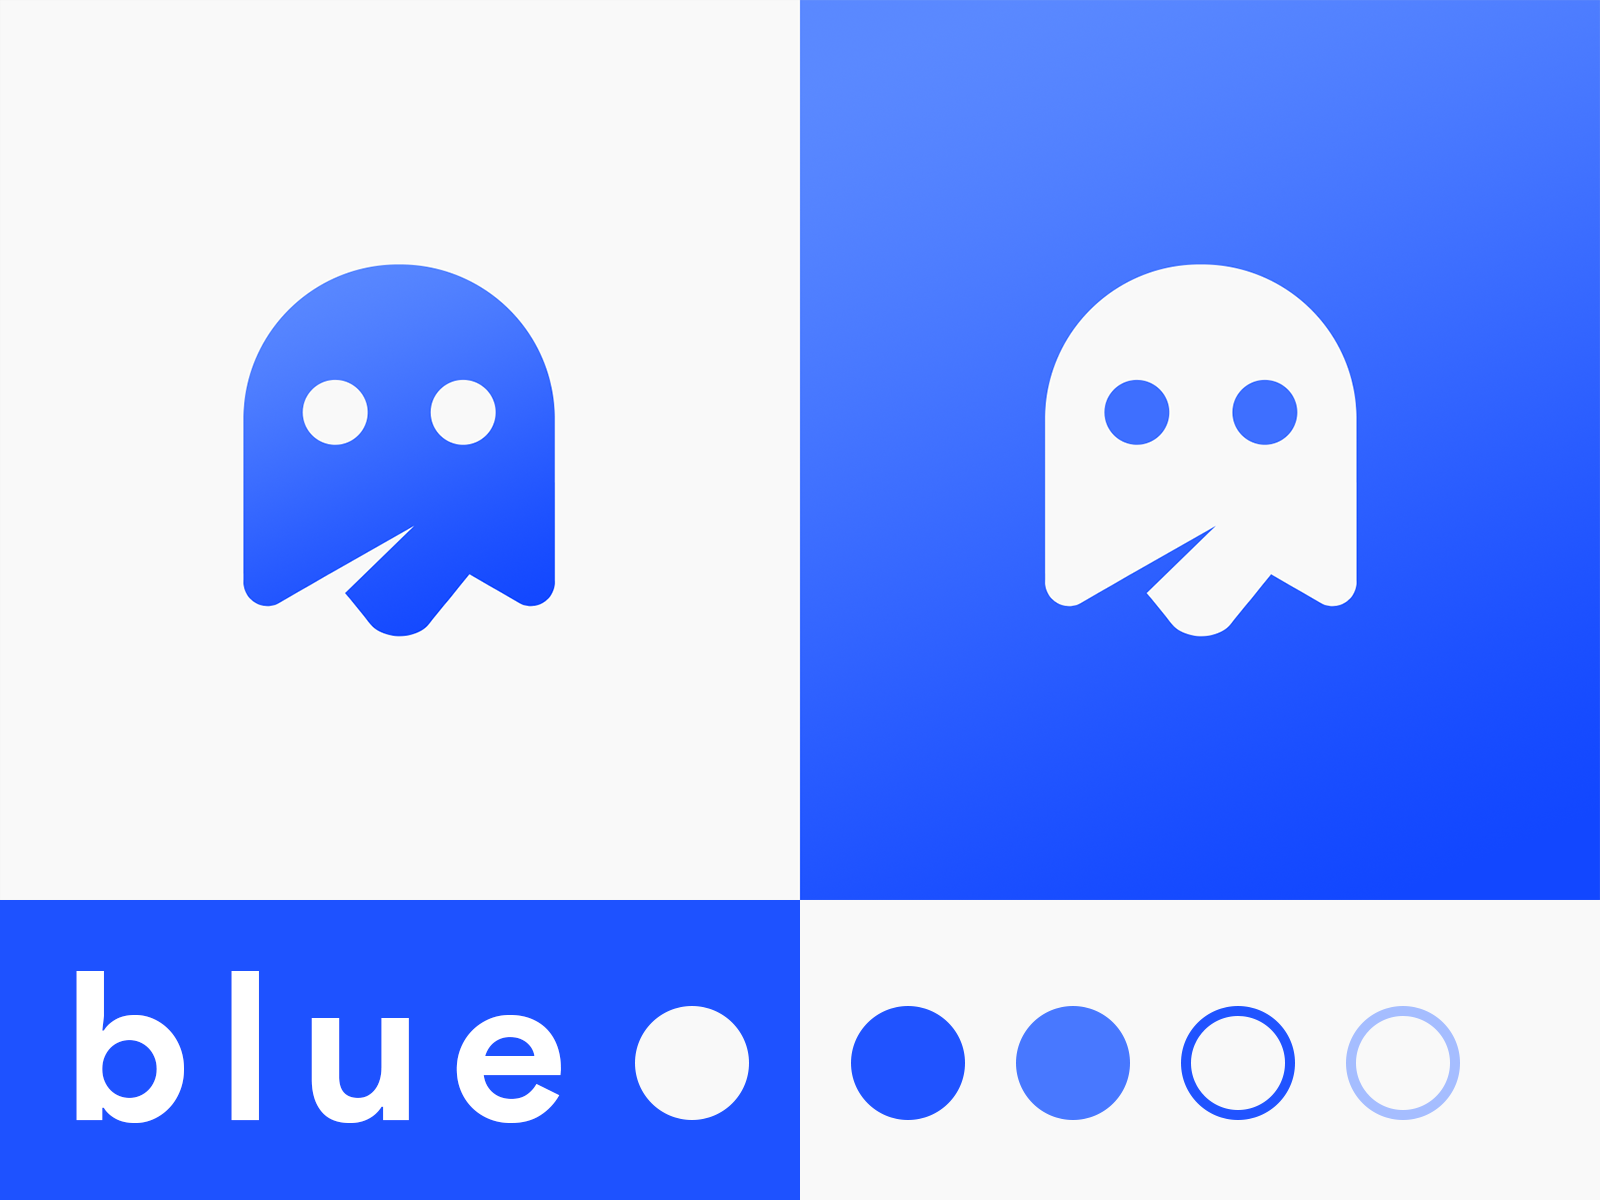 cool ghost logos